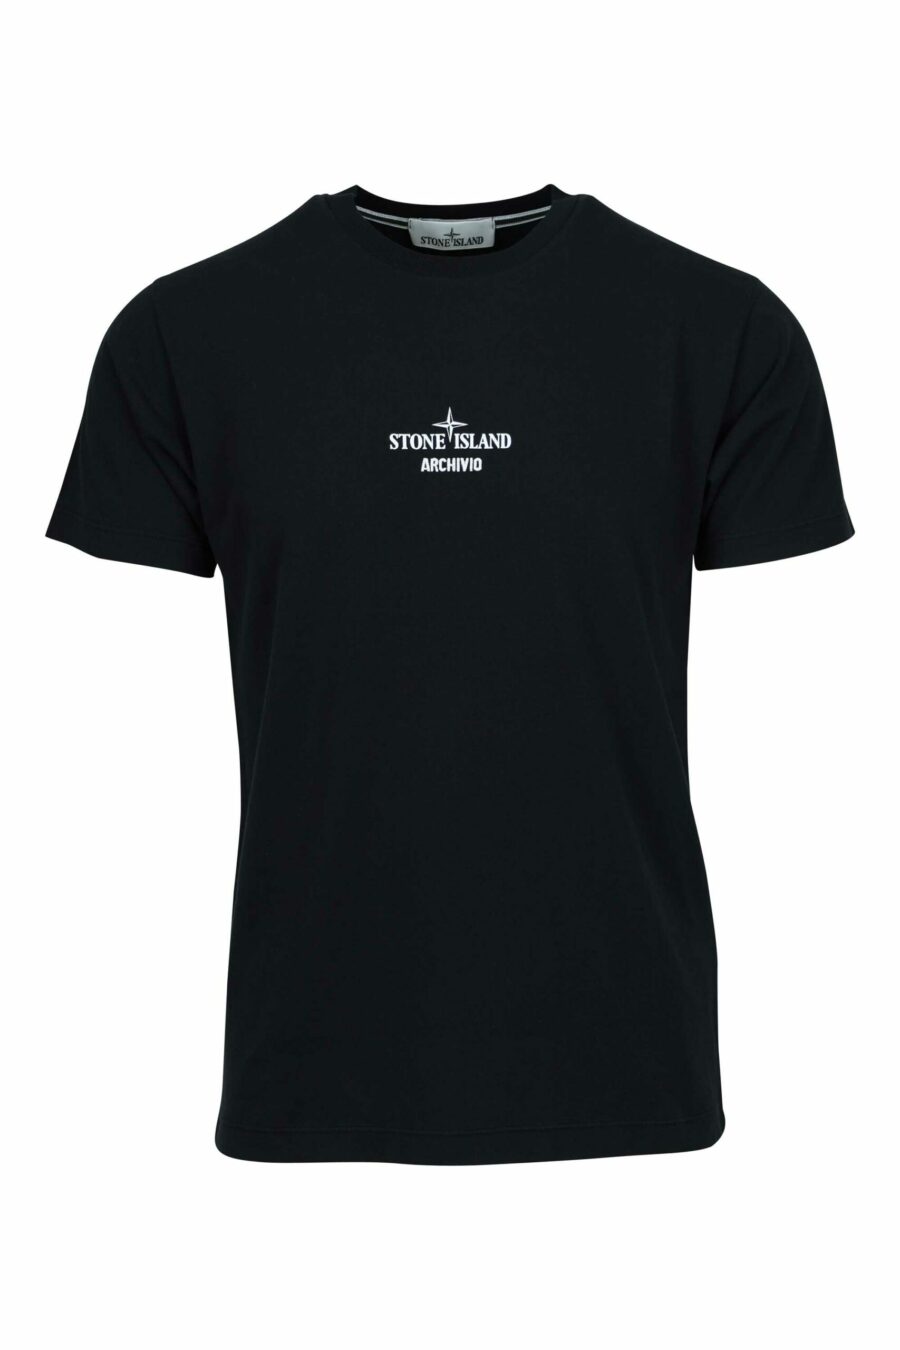 T-shirt preta com o mini-logotipo "archivio" centrado - 8052572924798 scaled